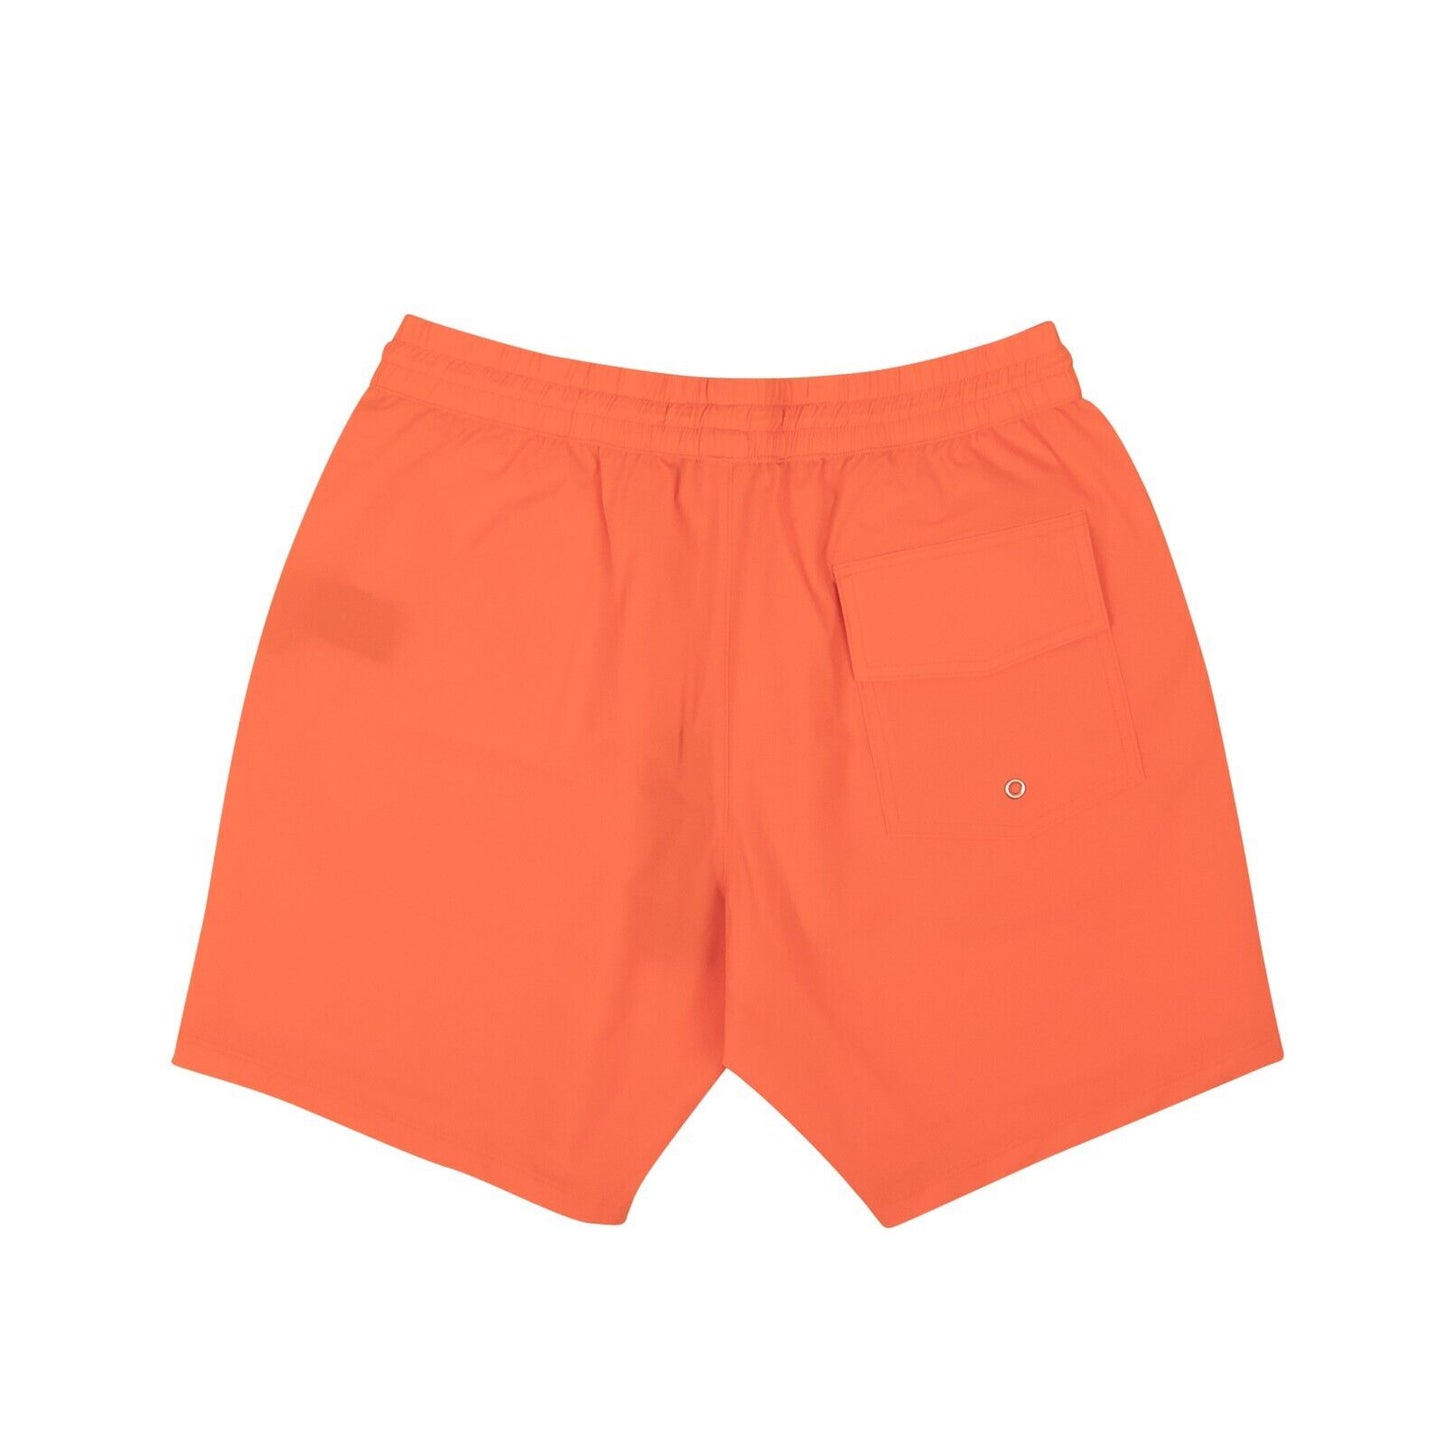 Nahmias Summerland Swim Short - Orange